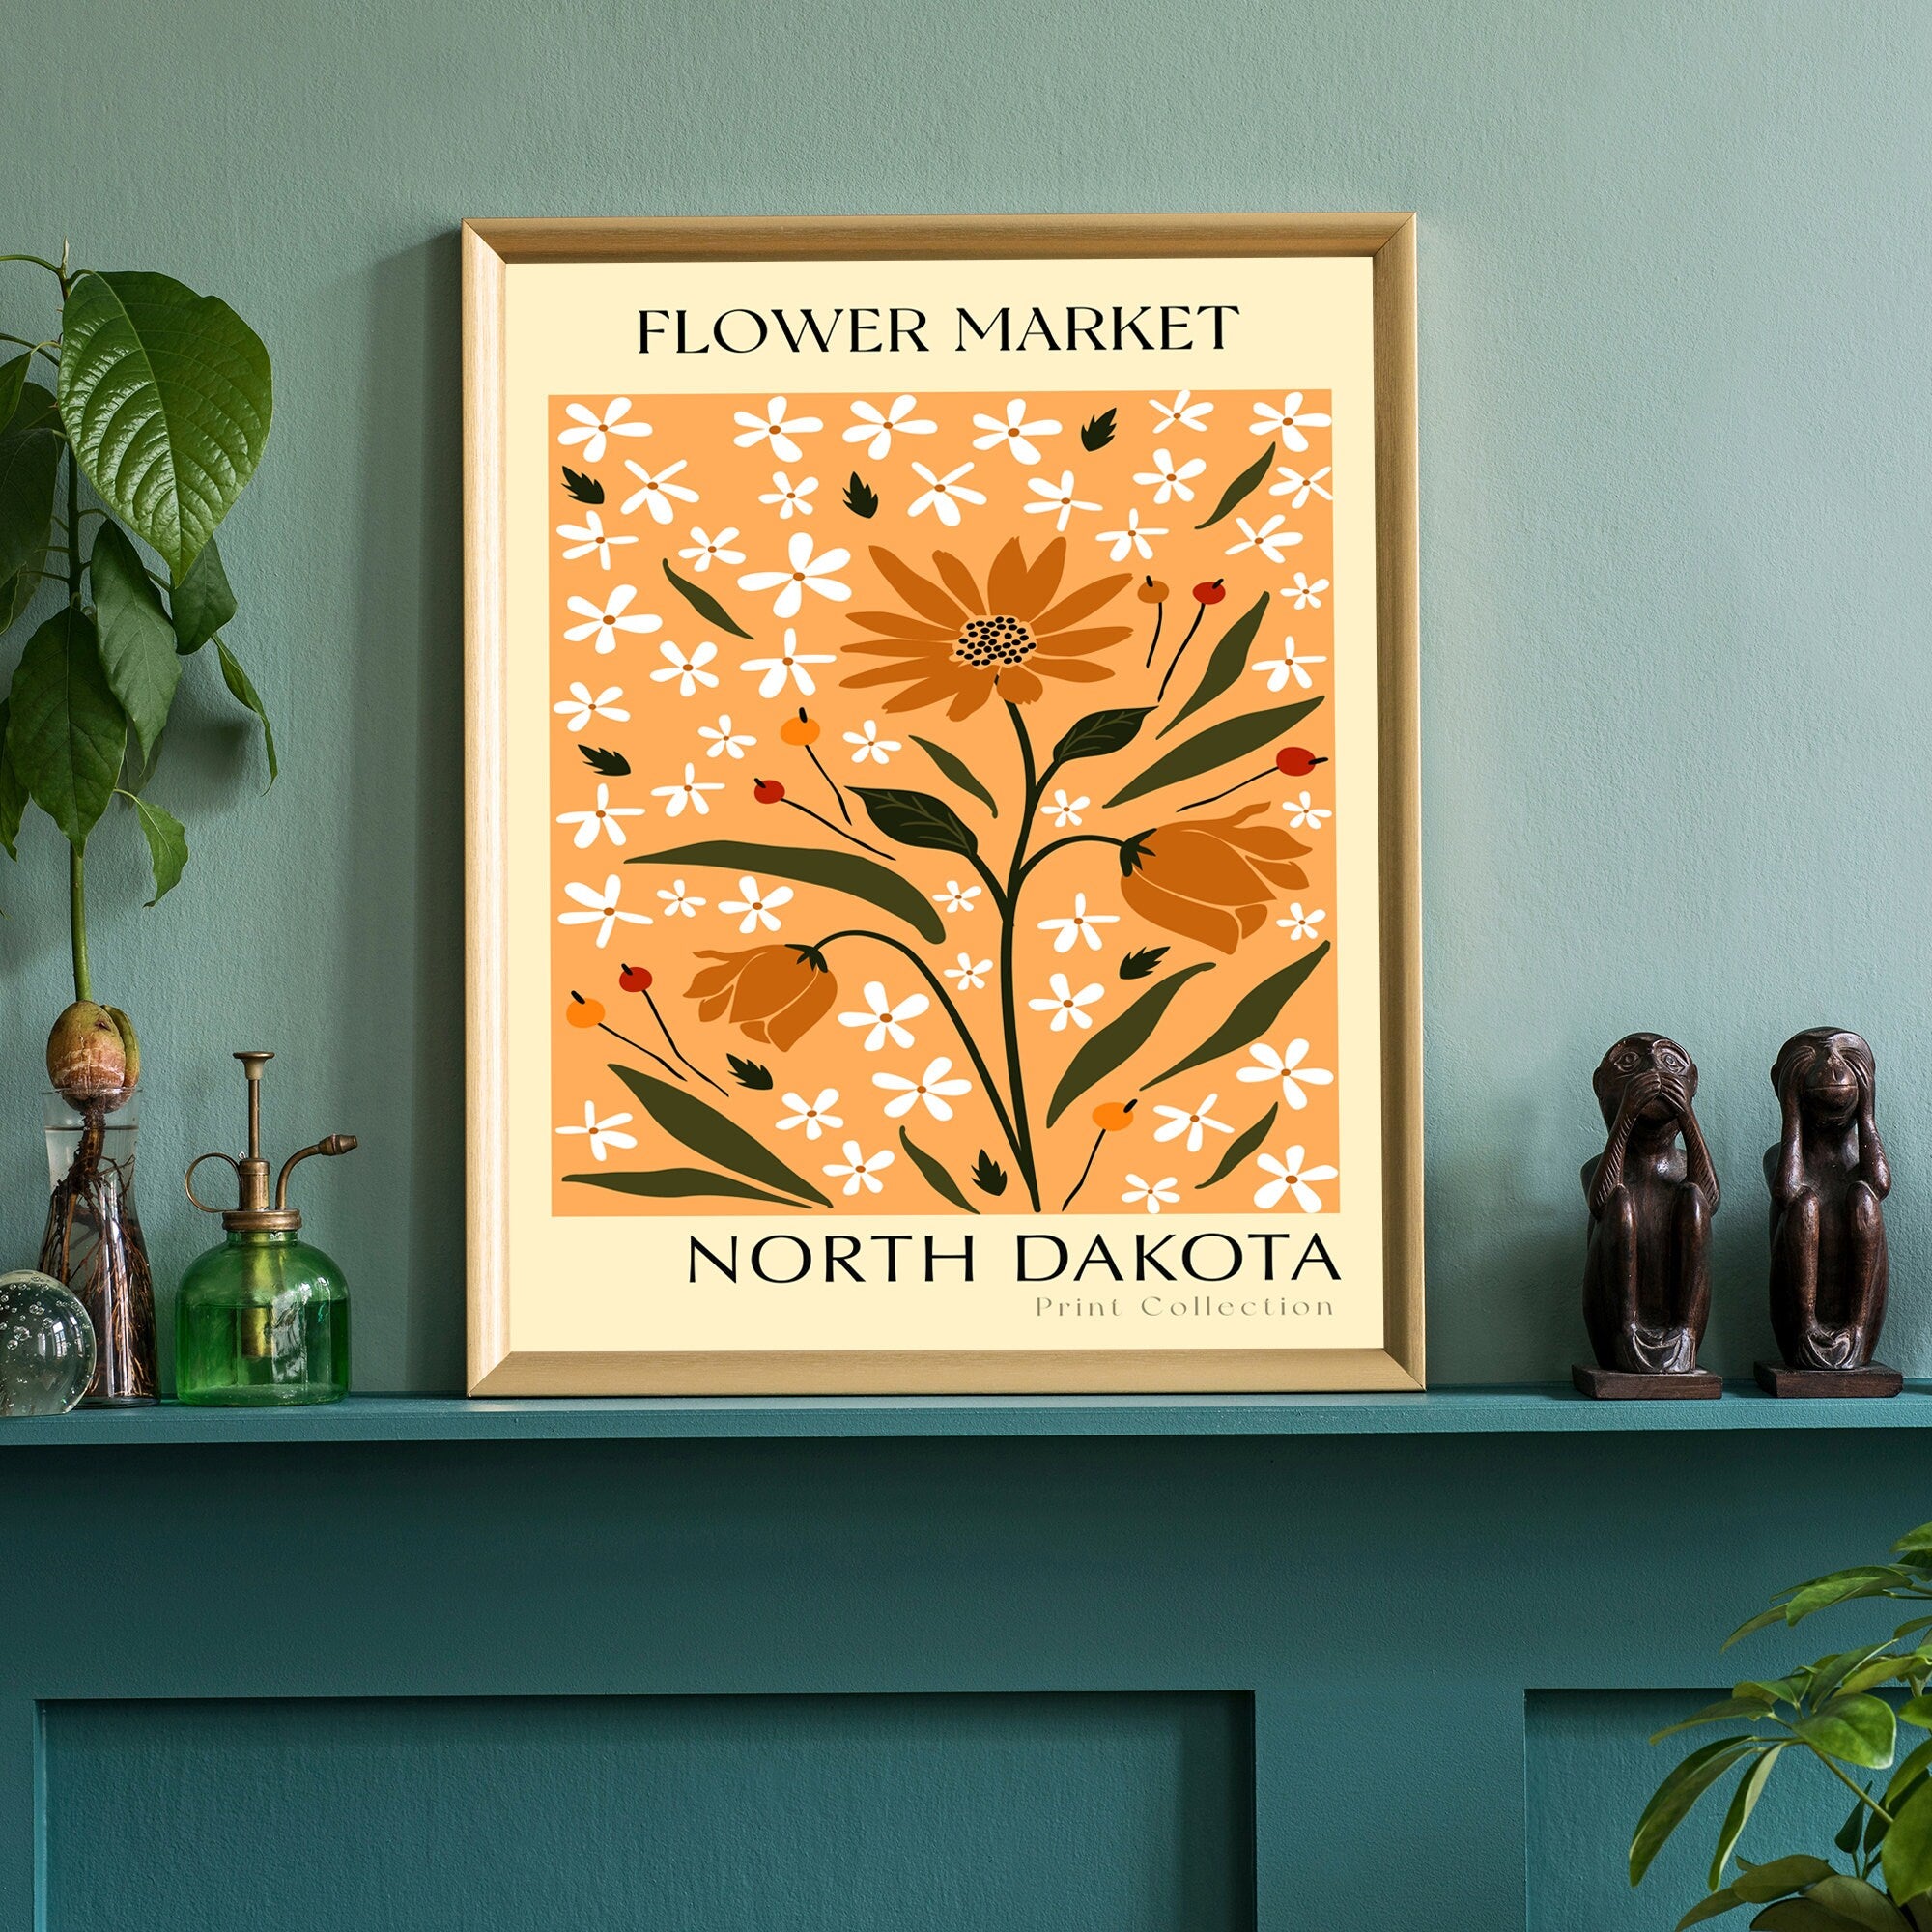 North Dakota State flower print, States poster, North Dakota flower market poster, Botanical posters, Nature poster artwork, Floral wall art